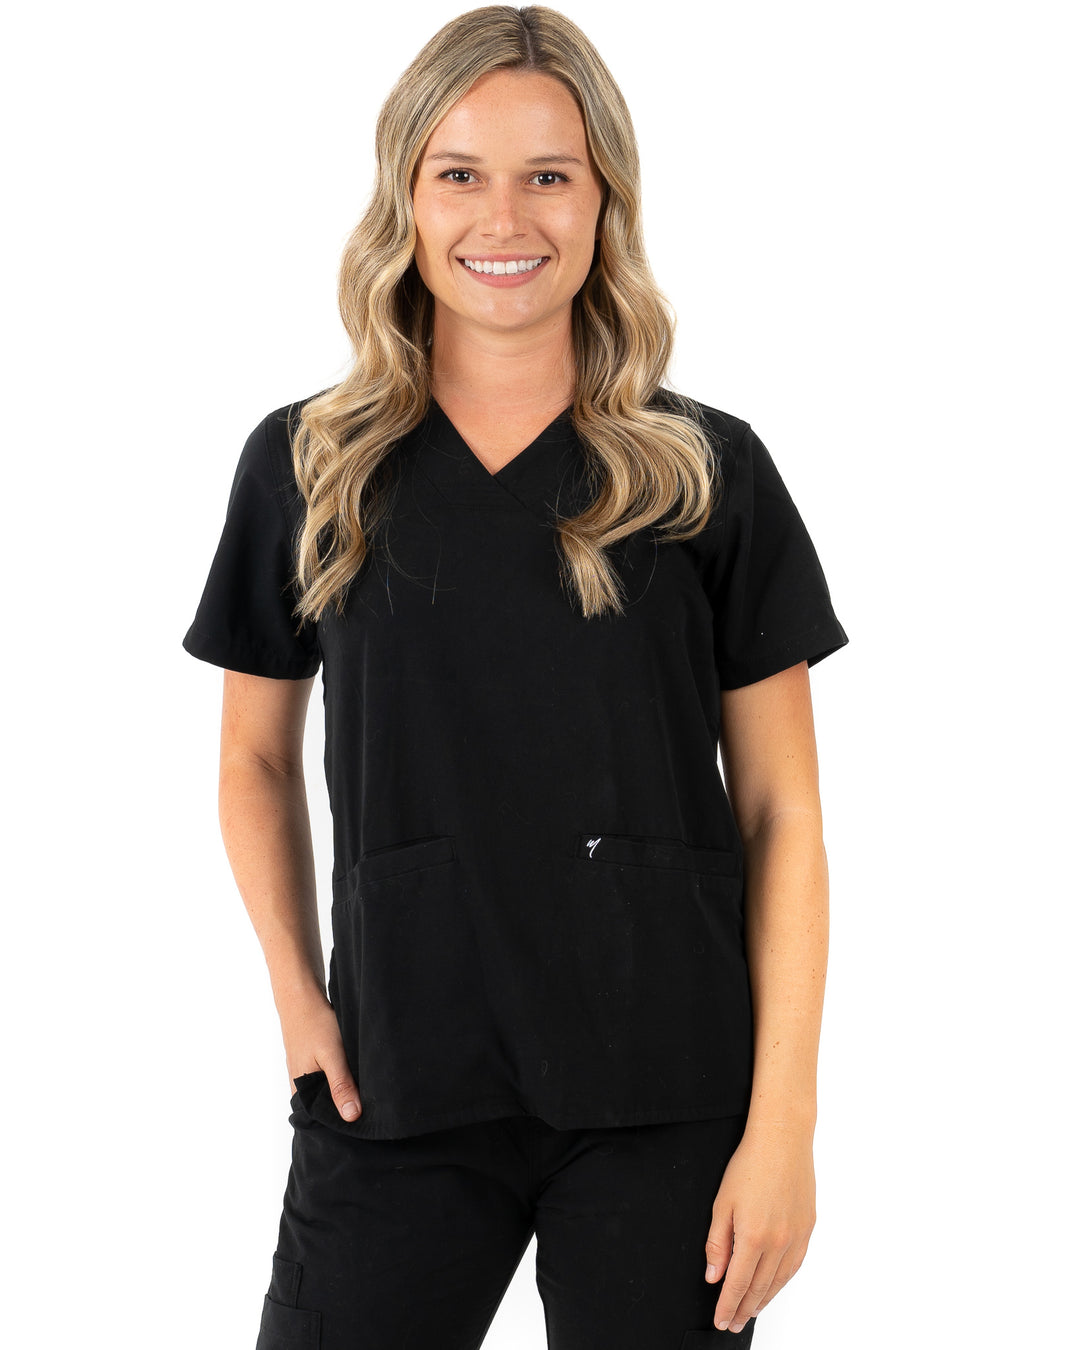 women's 2 Pocket Black Scrub Top - Amber - Jogger Scrubs by Millennials In Medicine (Mim Scrubs)